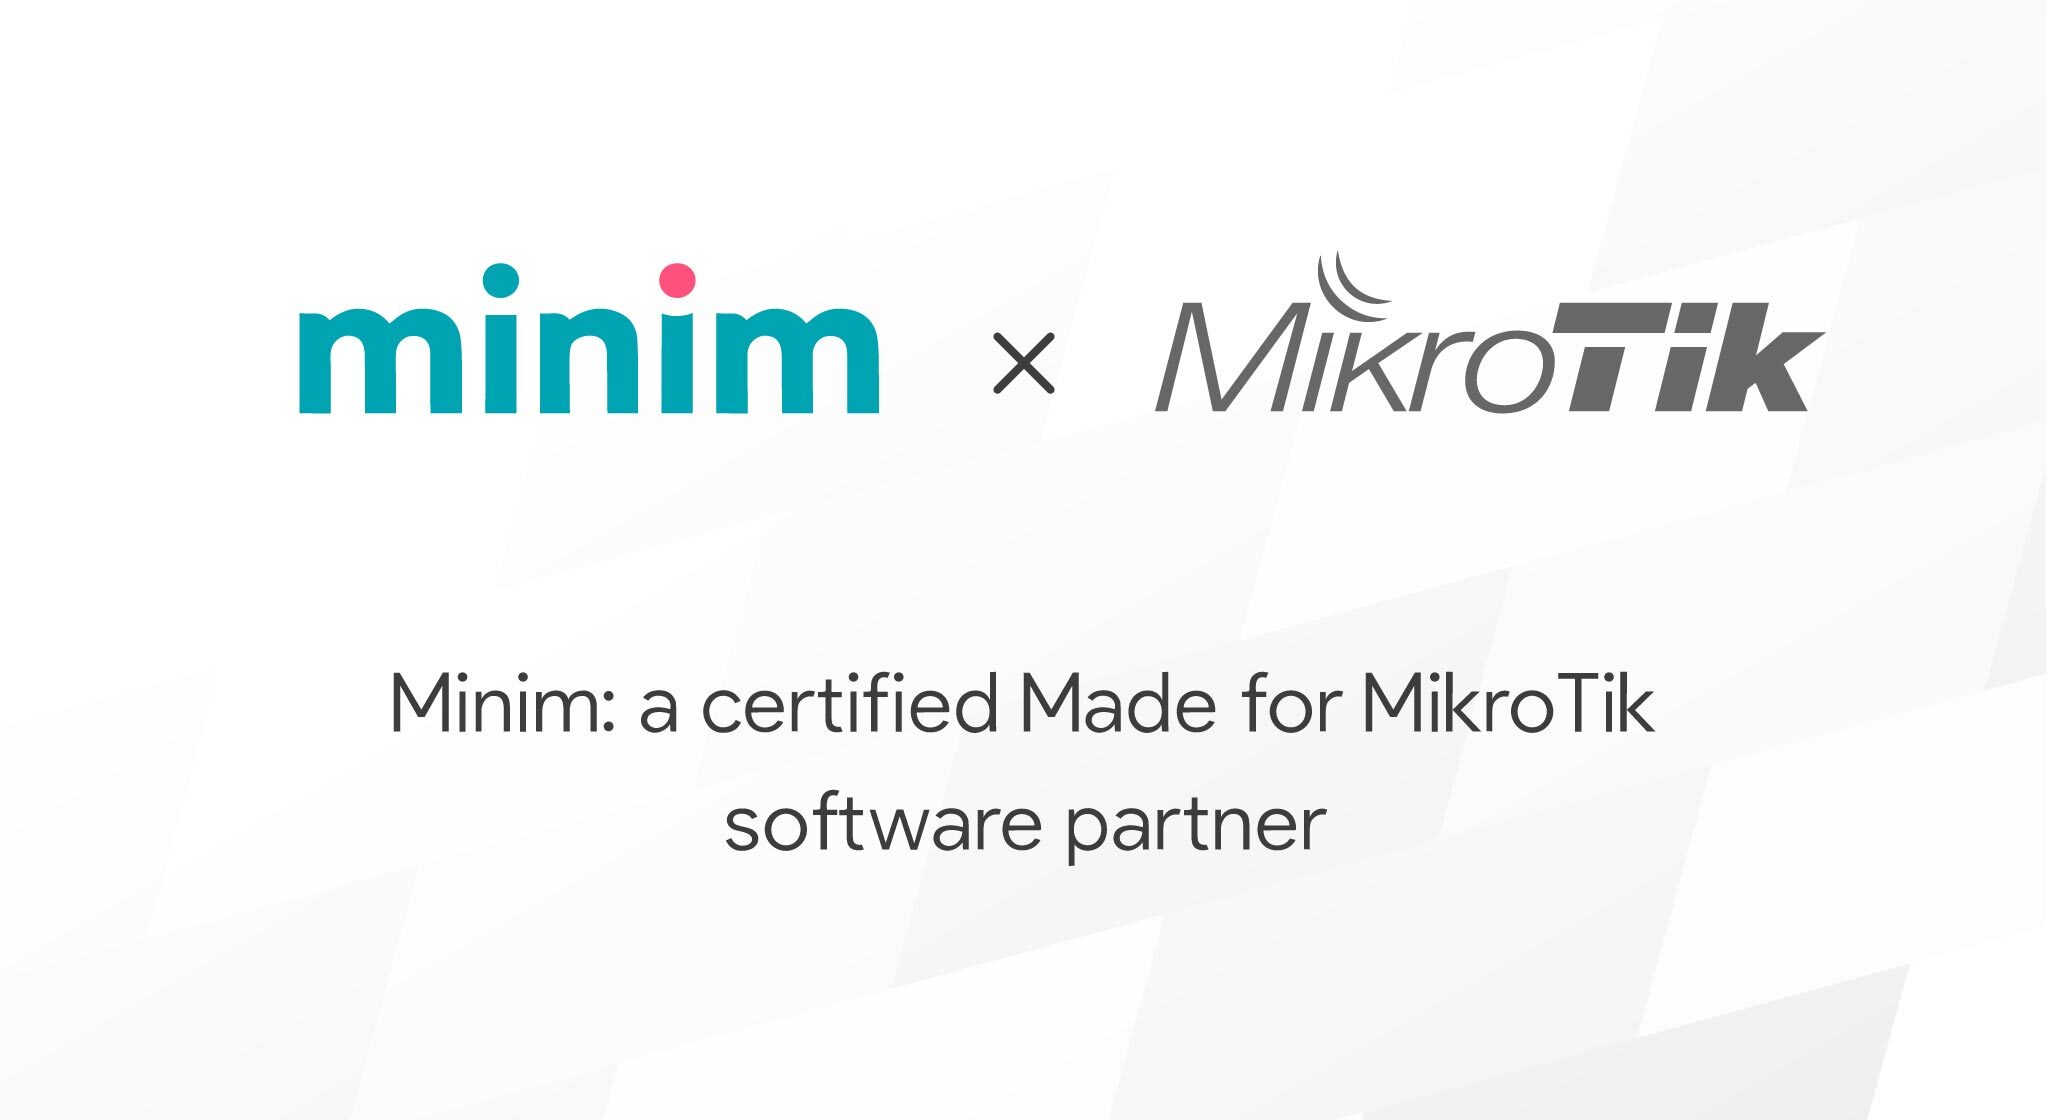 <img src=“minim-mikrotik-certified-software-partner.png” alt=“minim-manage-remote-MikroTik-firmware-updates-for-automated-MikroTik-cloud-managment”>